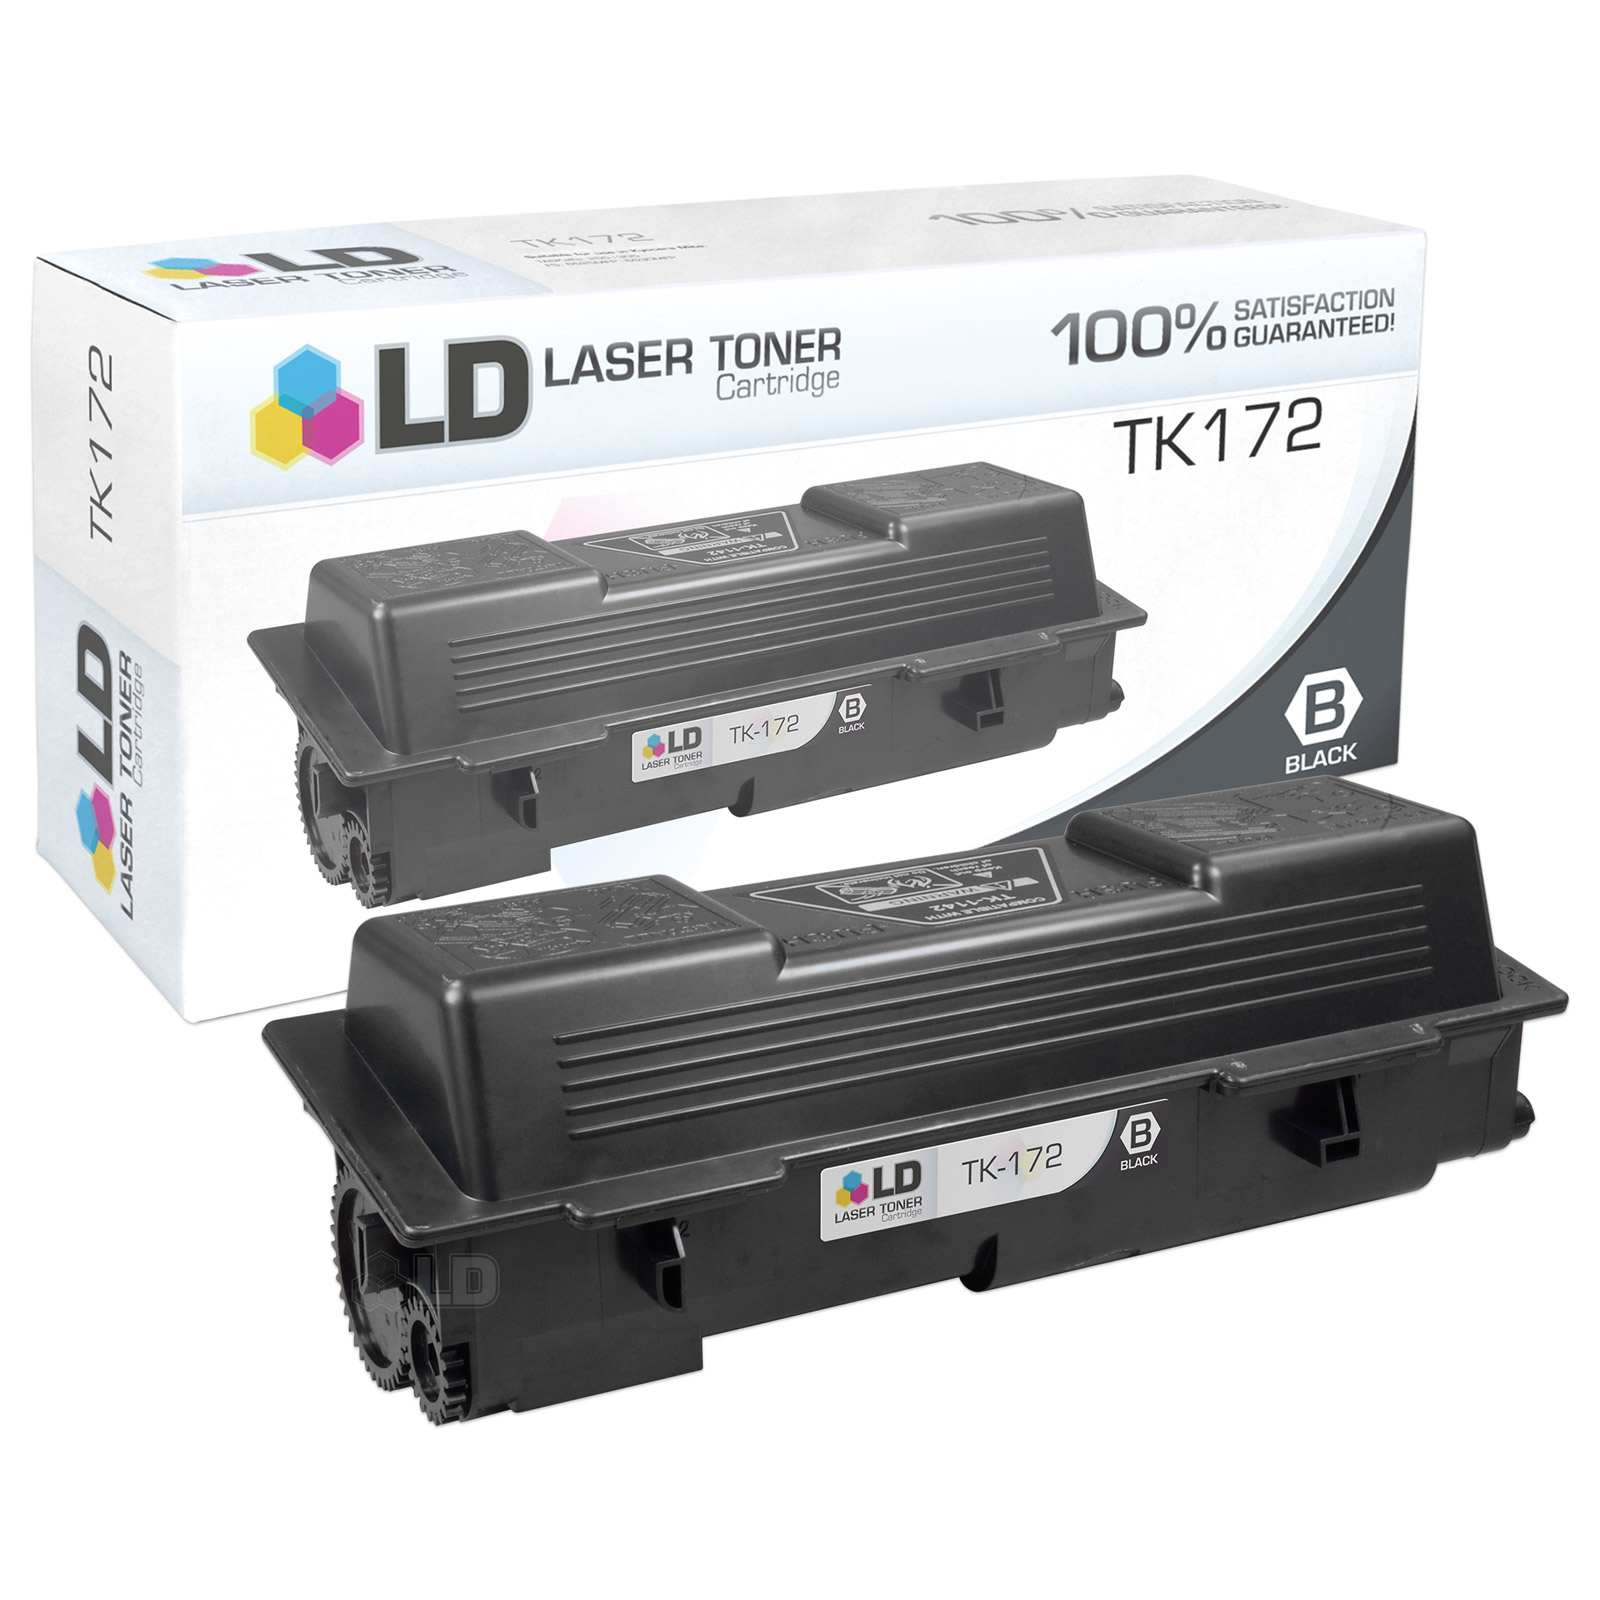 Compatible Kyocera Mita Black TK-172 Laser Toner Cartridge for the FS-1320D and FS-1370DN Printers - image 1 of 1